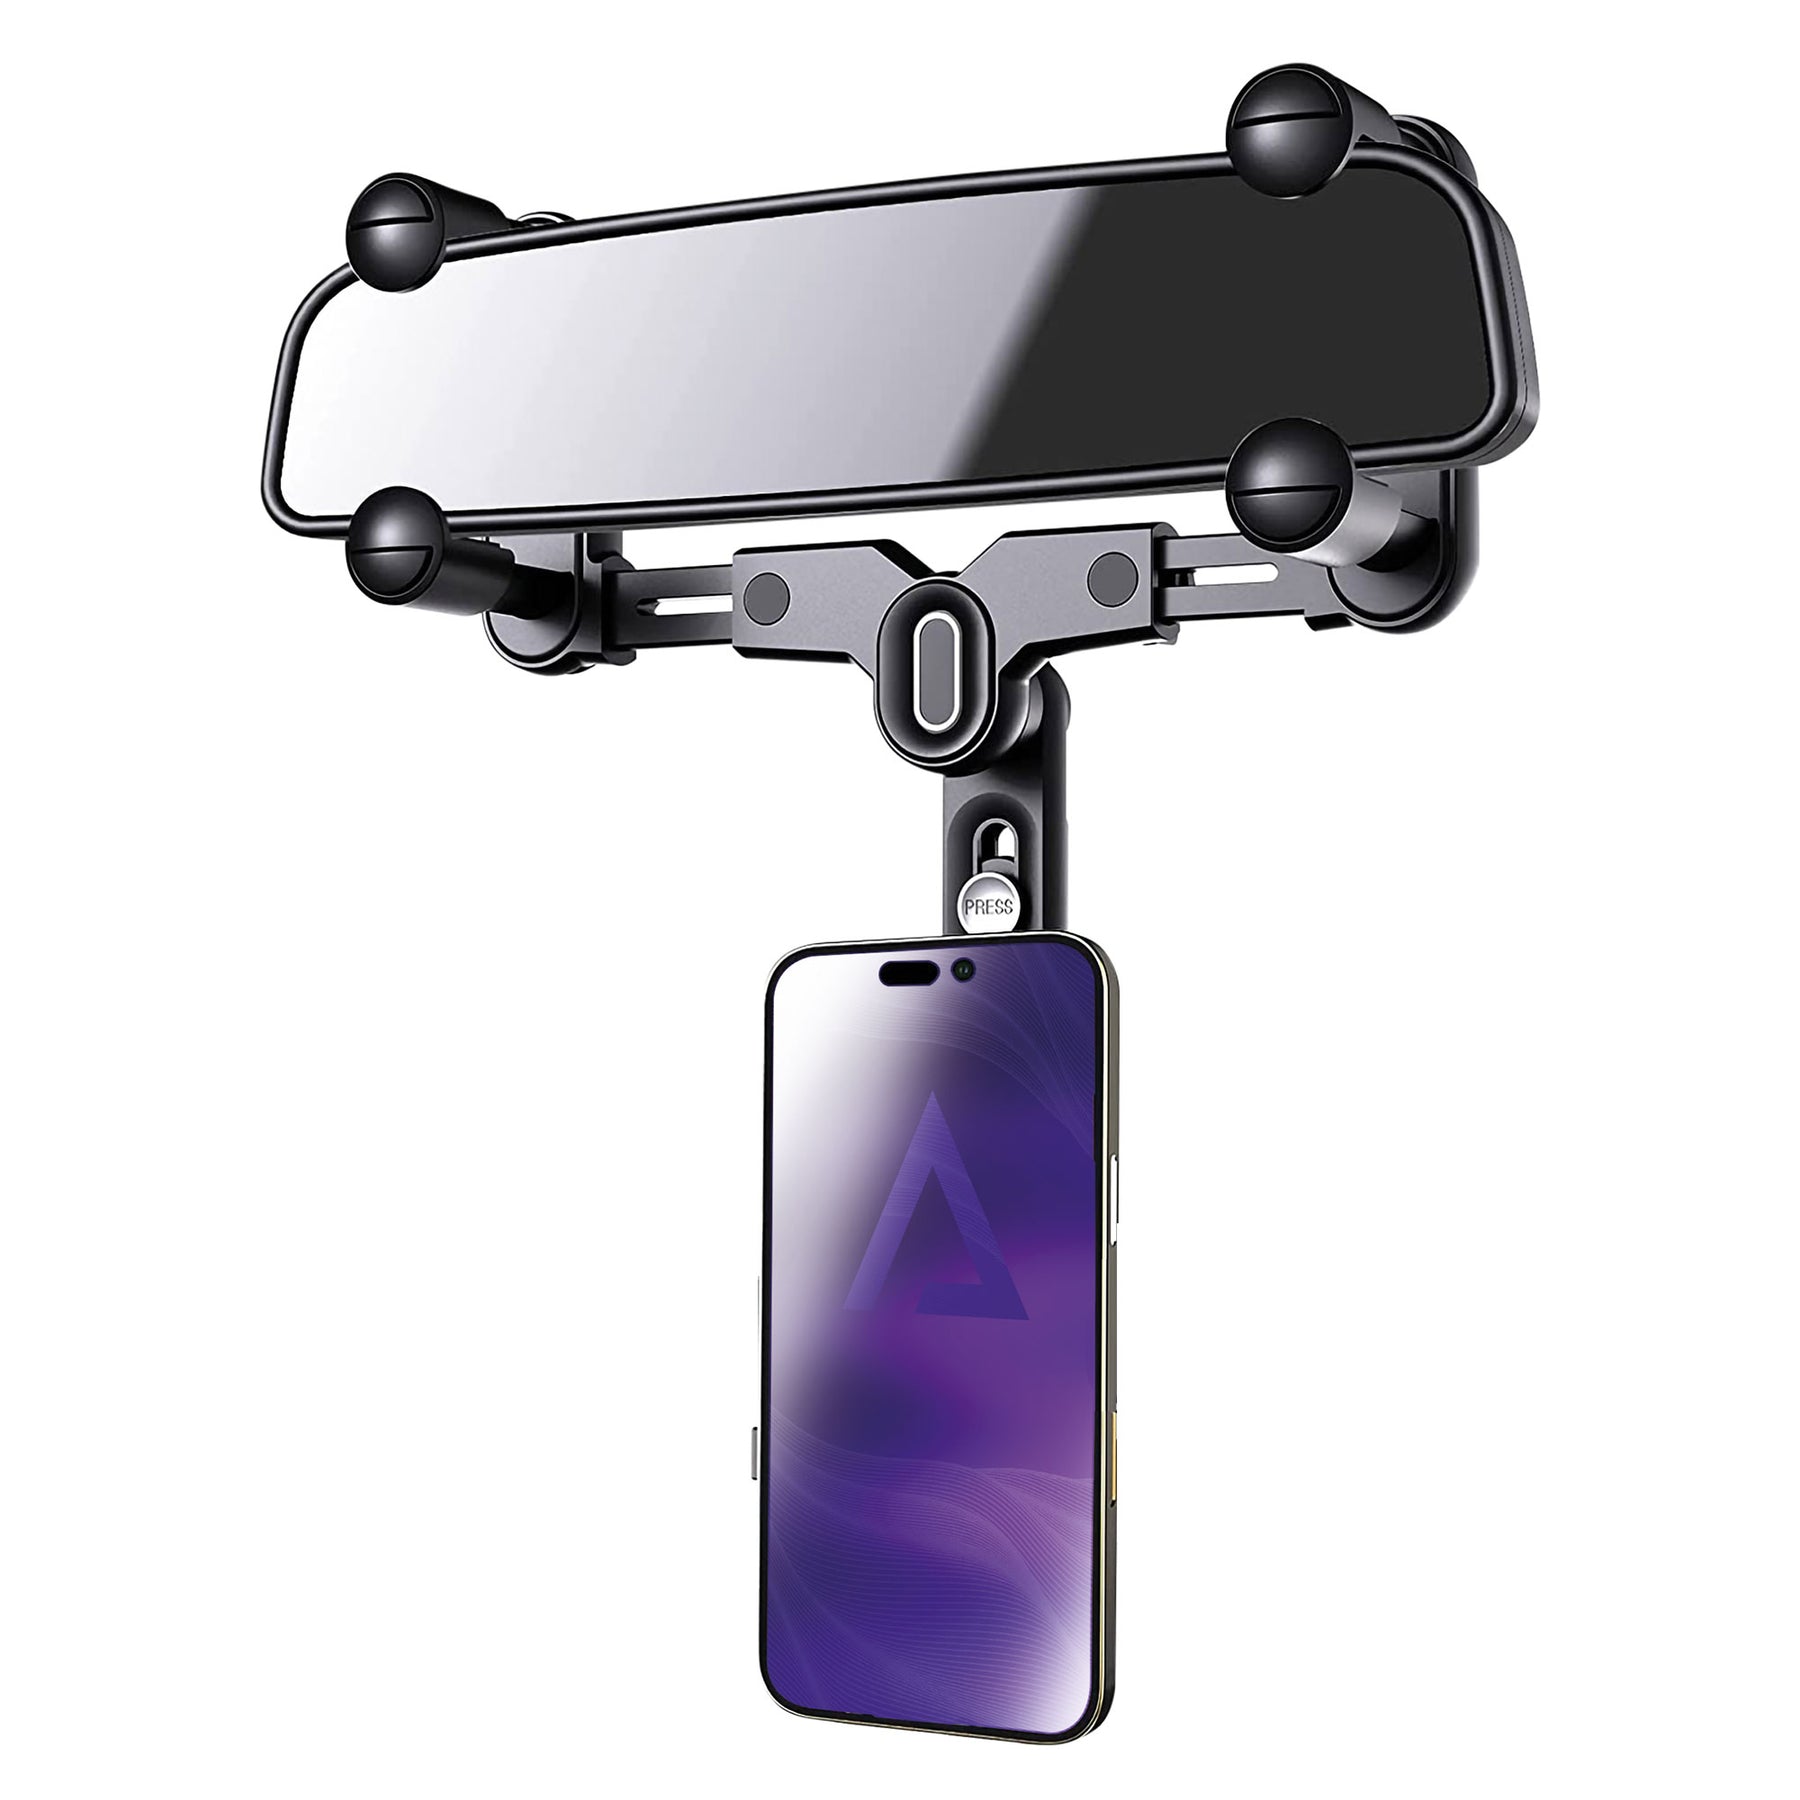 HyperMount Rear View | Phone Mount |  360 Rotation, Retractable & Adjustable